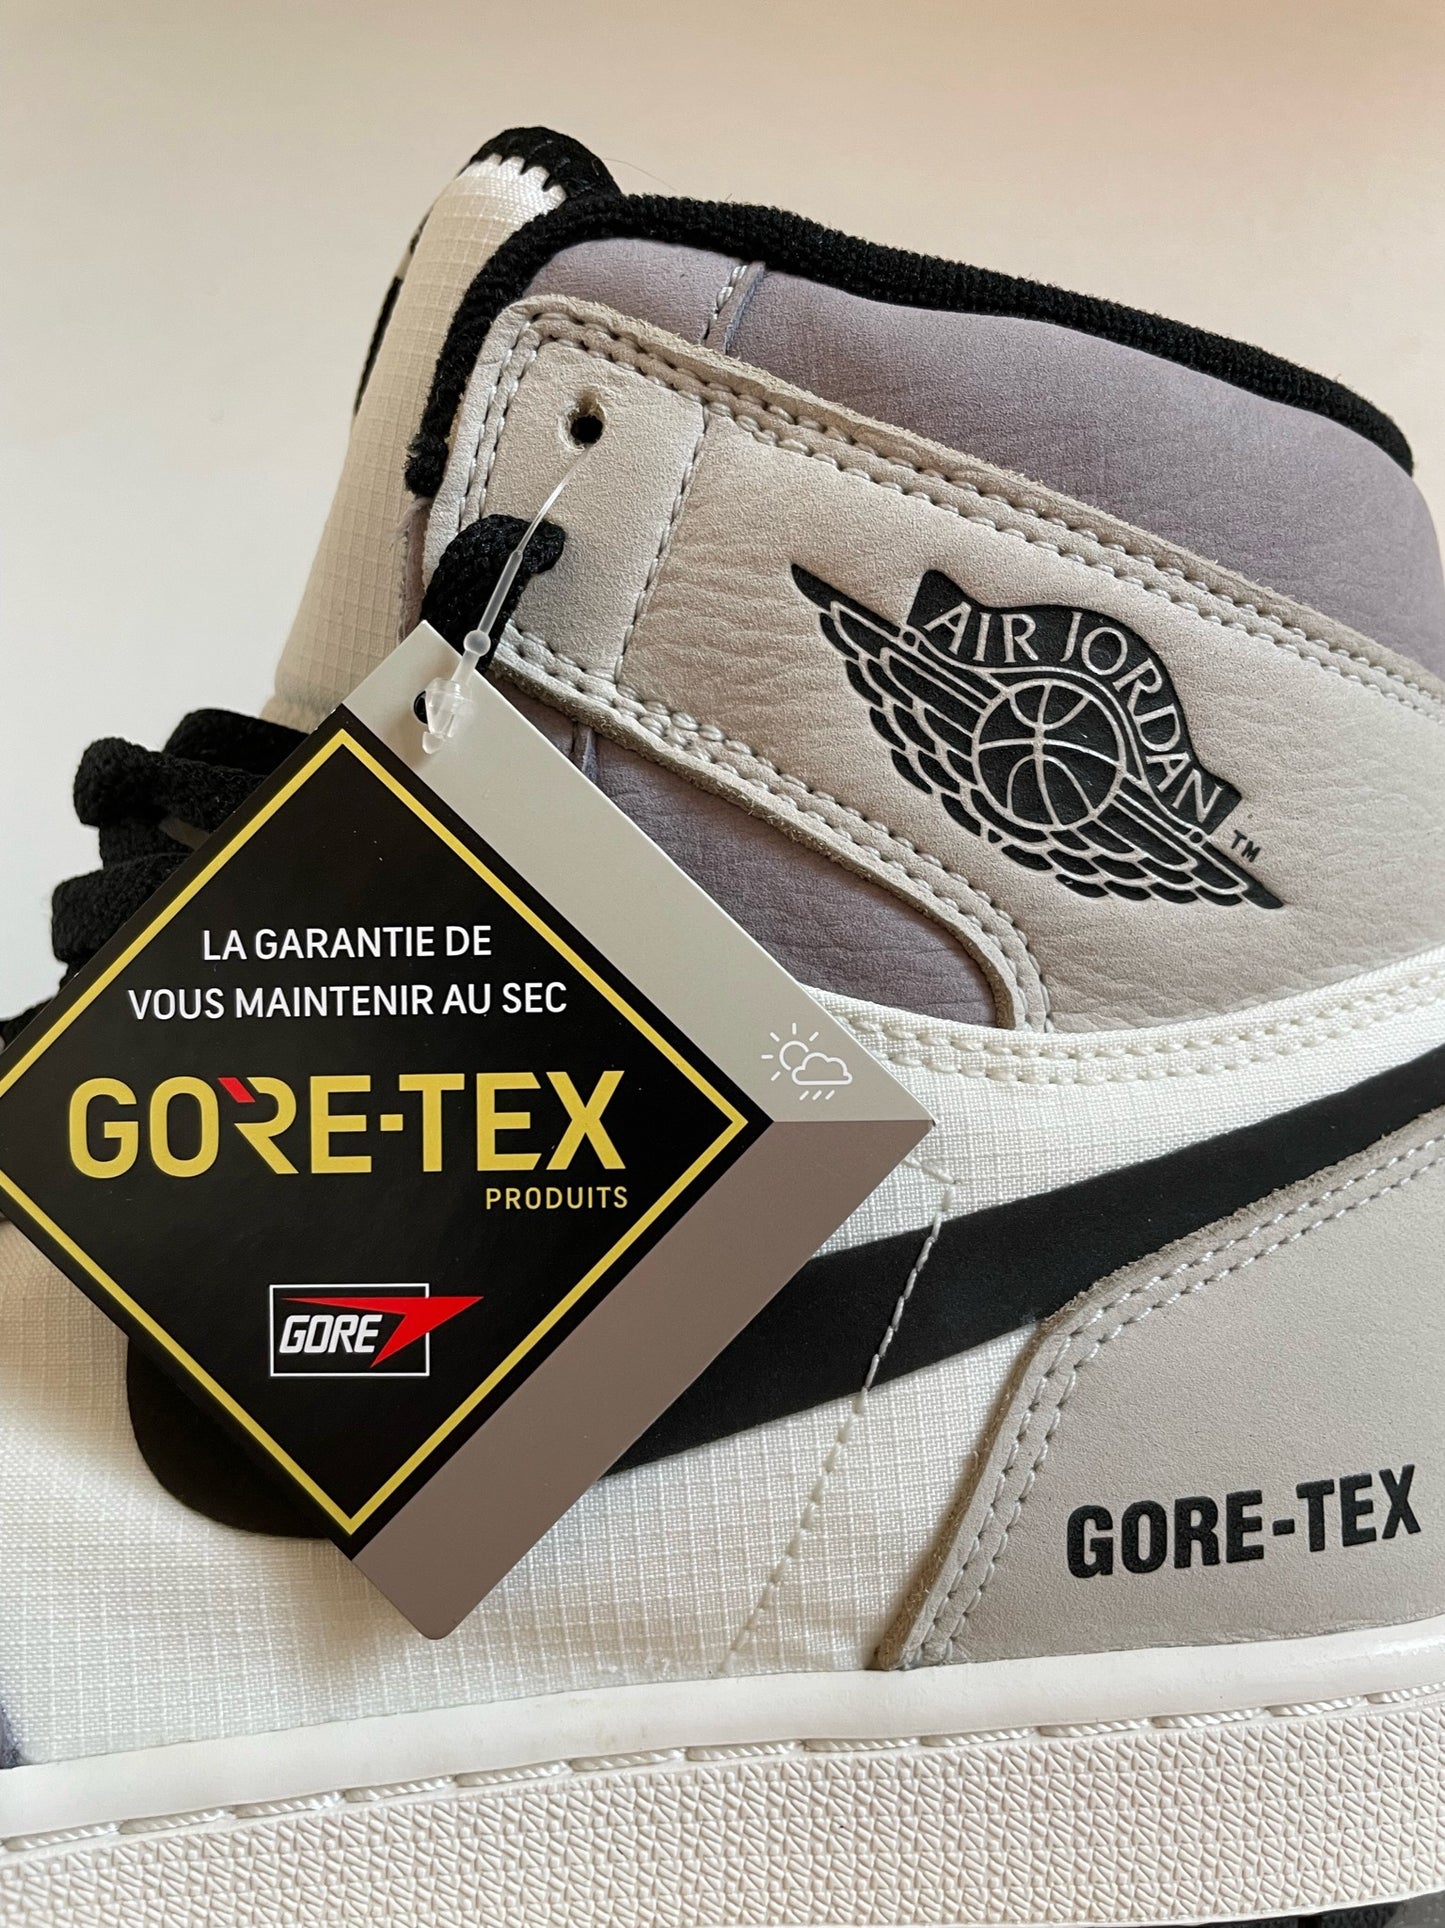 ANTWERP SNKR - Nike Air Jordan 1 Retro High Element Gore-Tex Light Bone